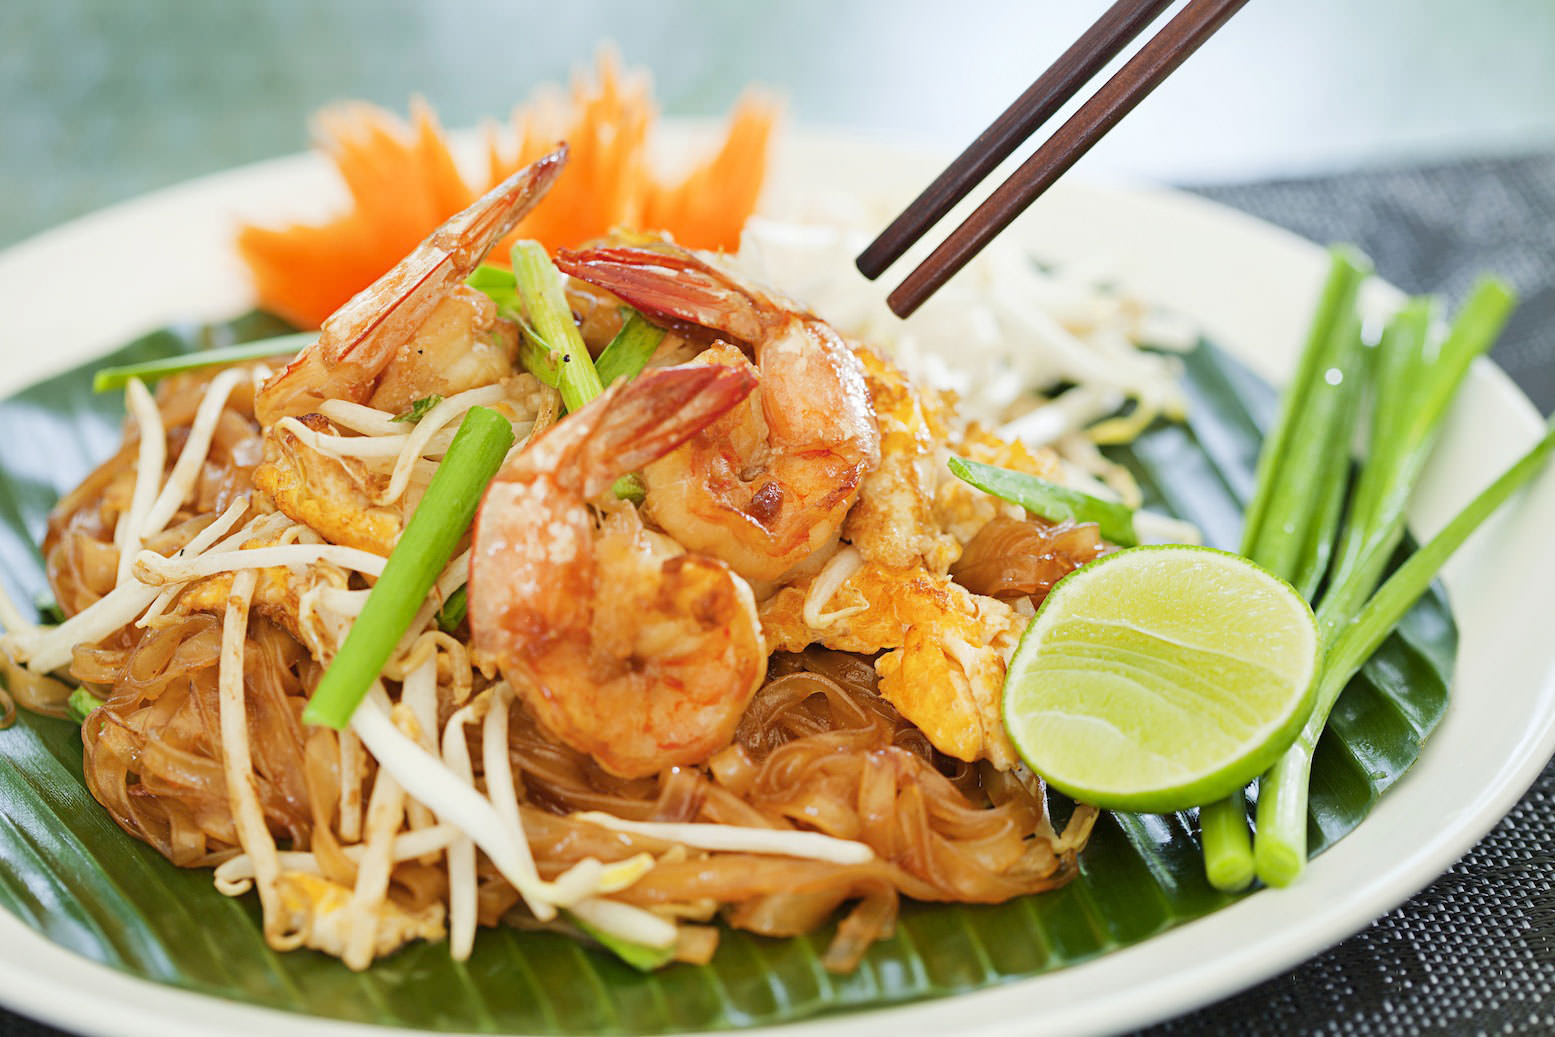 Pad thai – Thai-style noodle fry-up